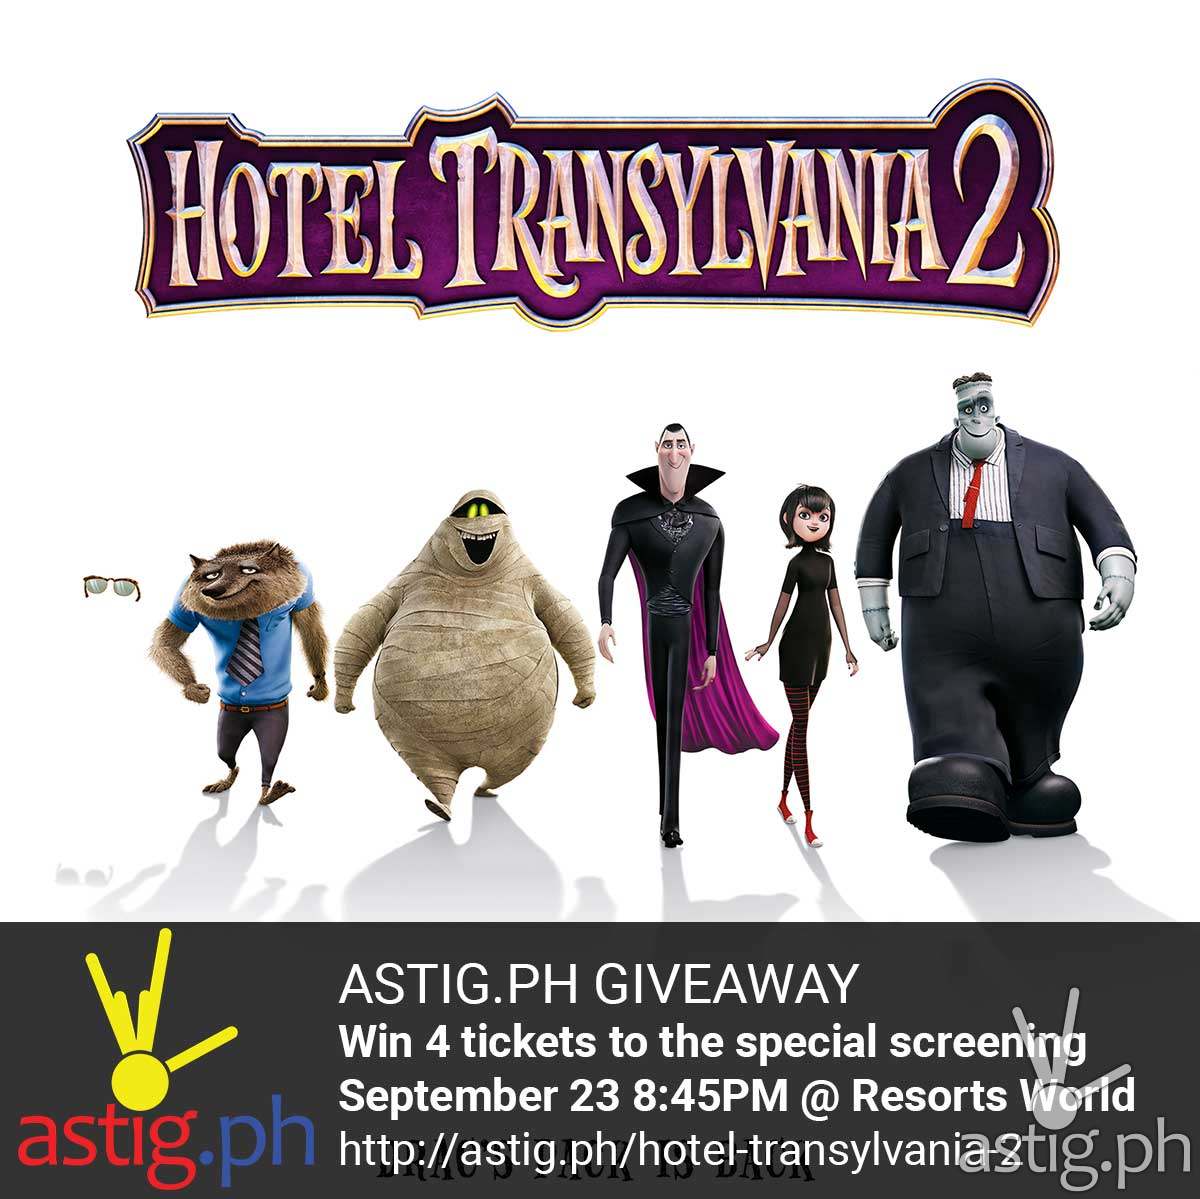 Hotel Transylvania 2 Sony Pictures Animation